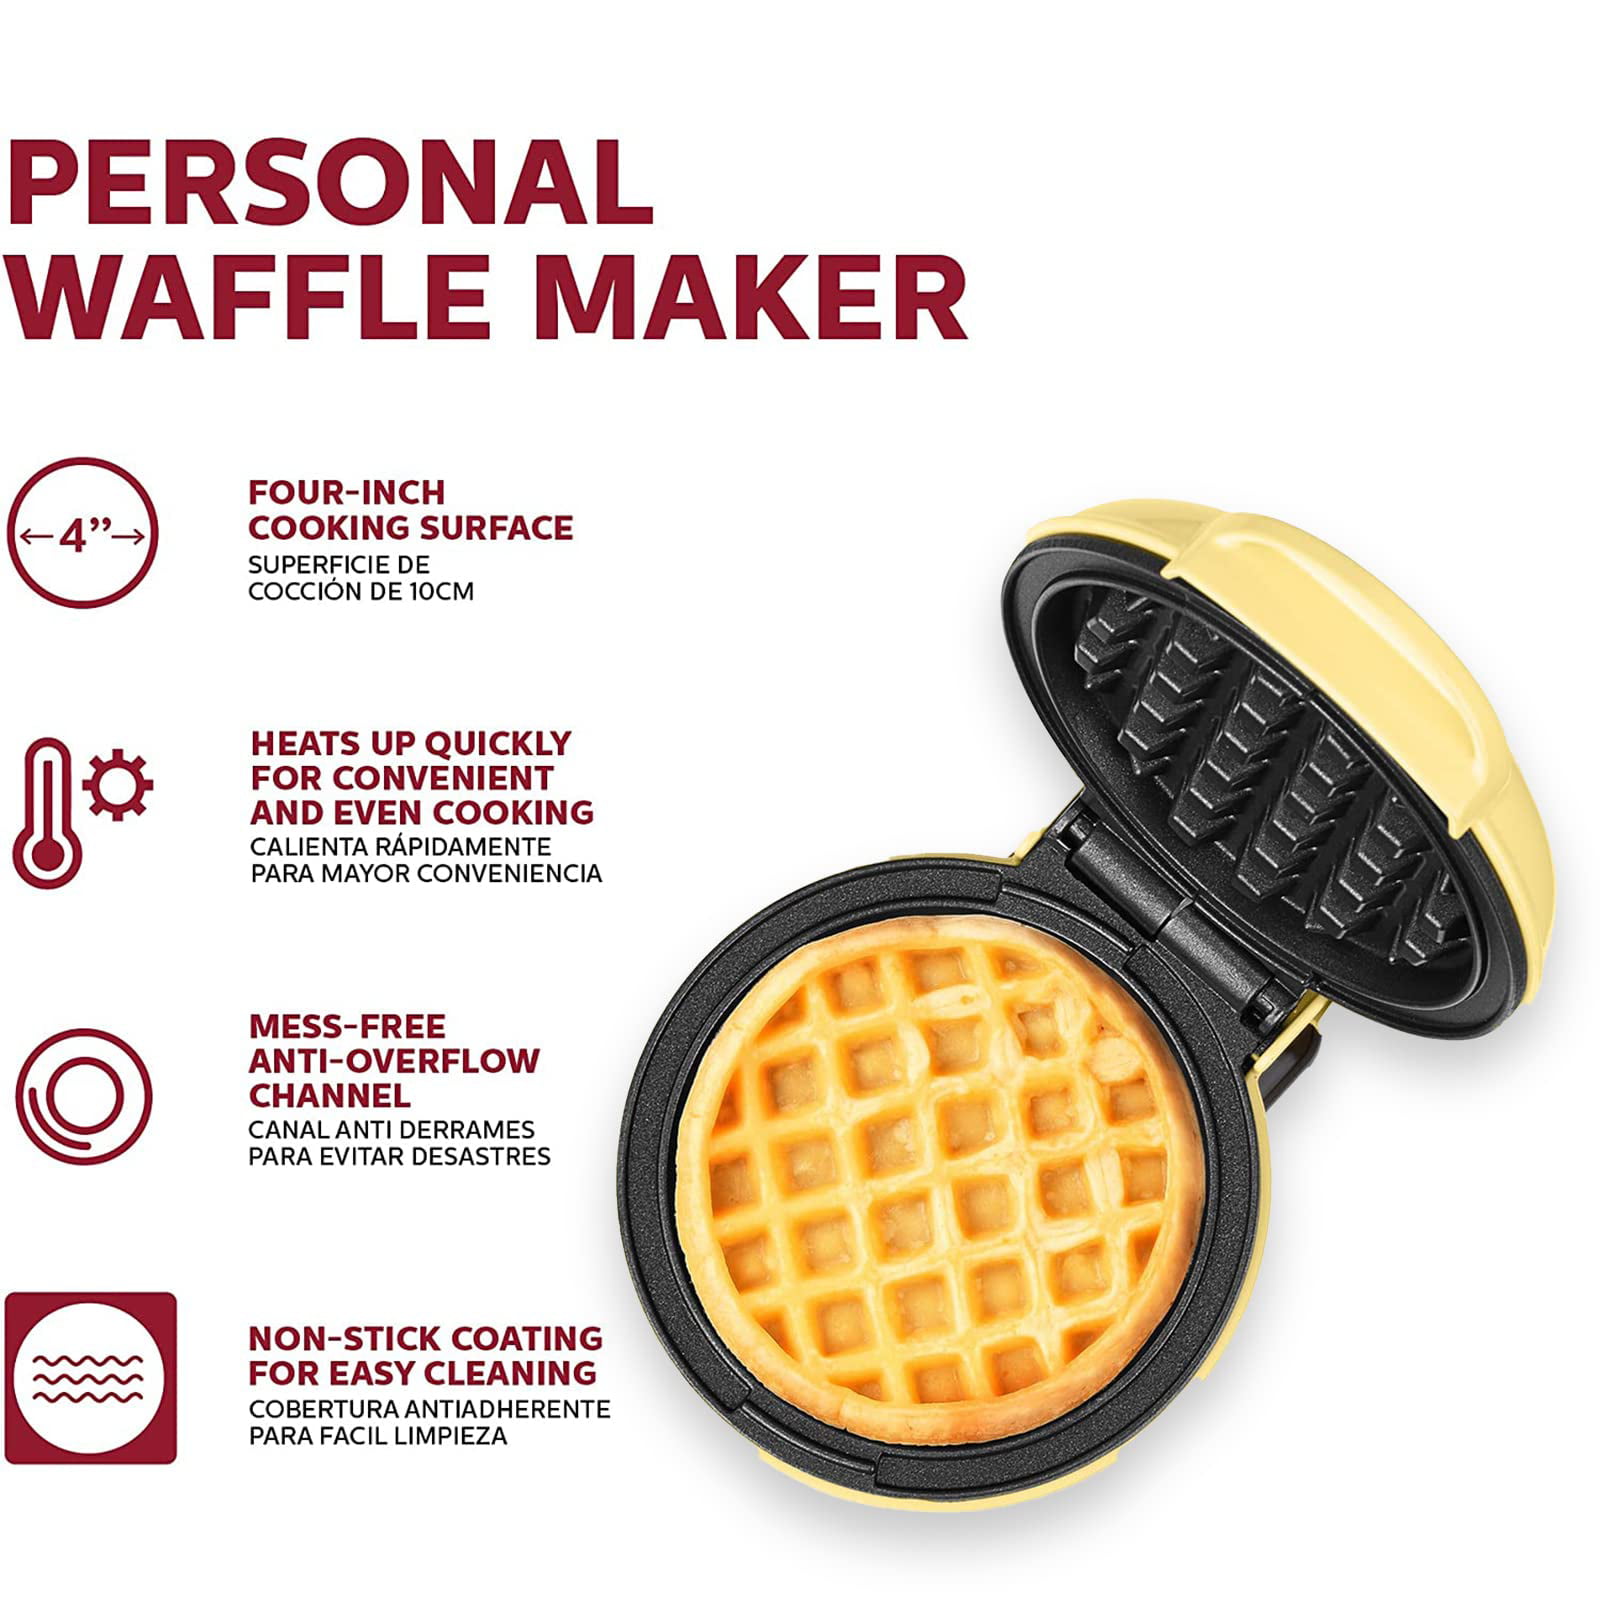  Candora Mini Waffle Maker Machine for Individual